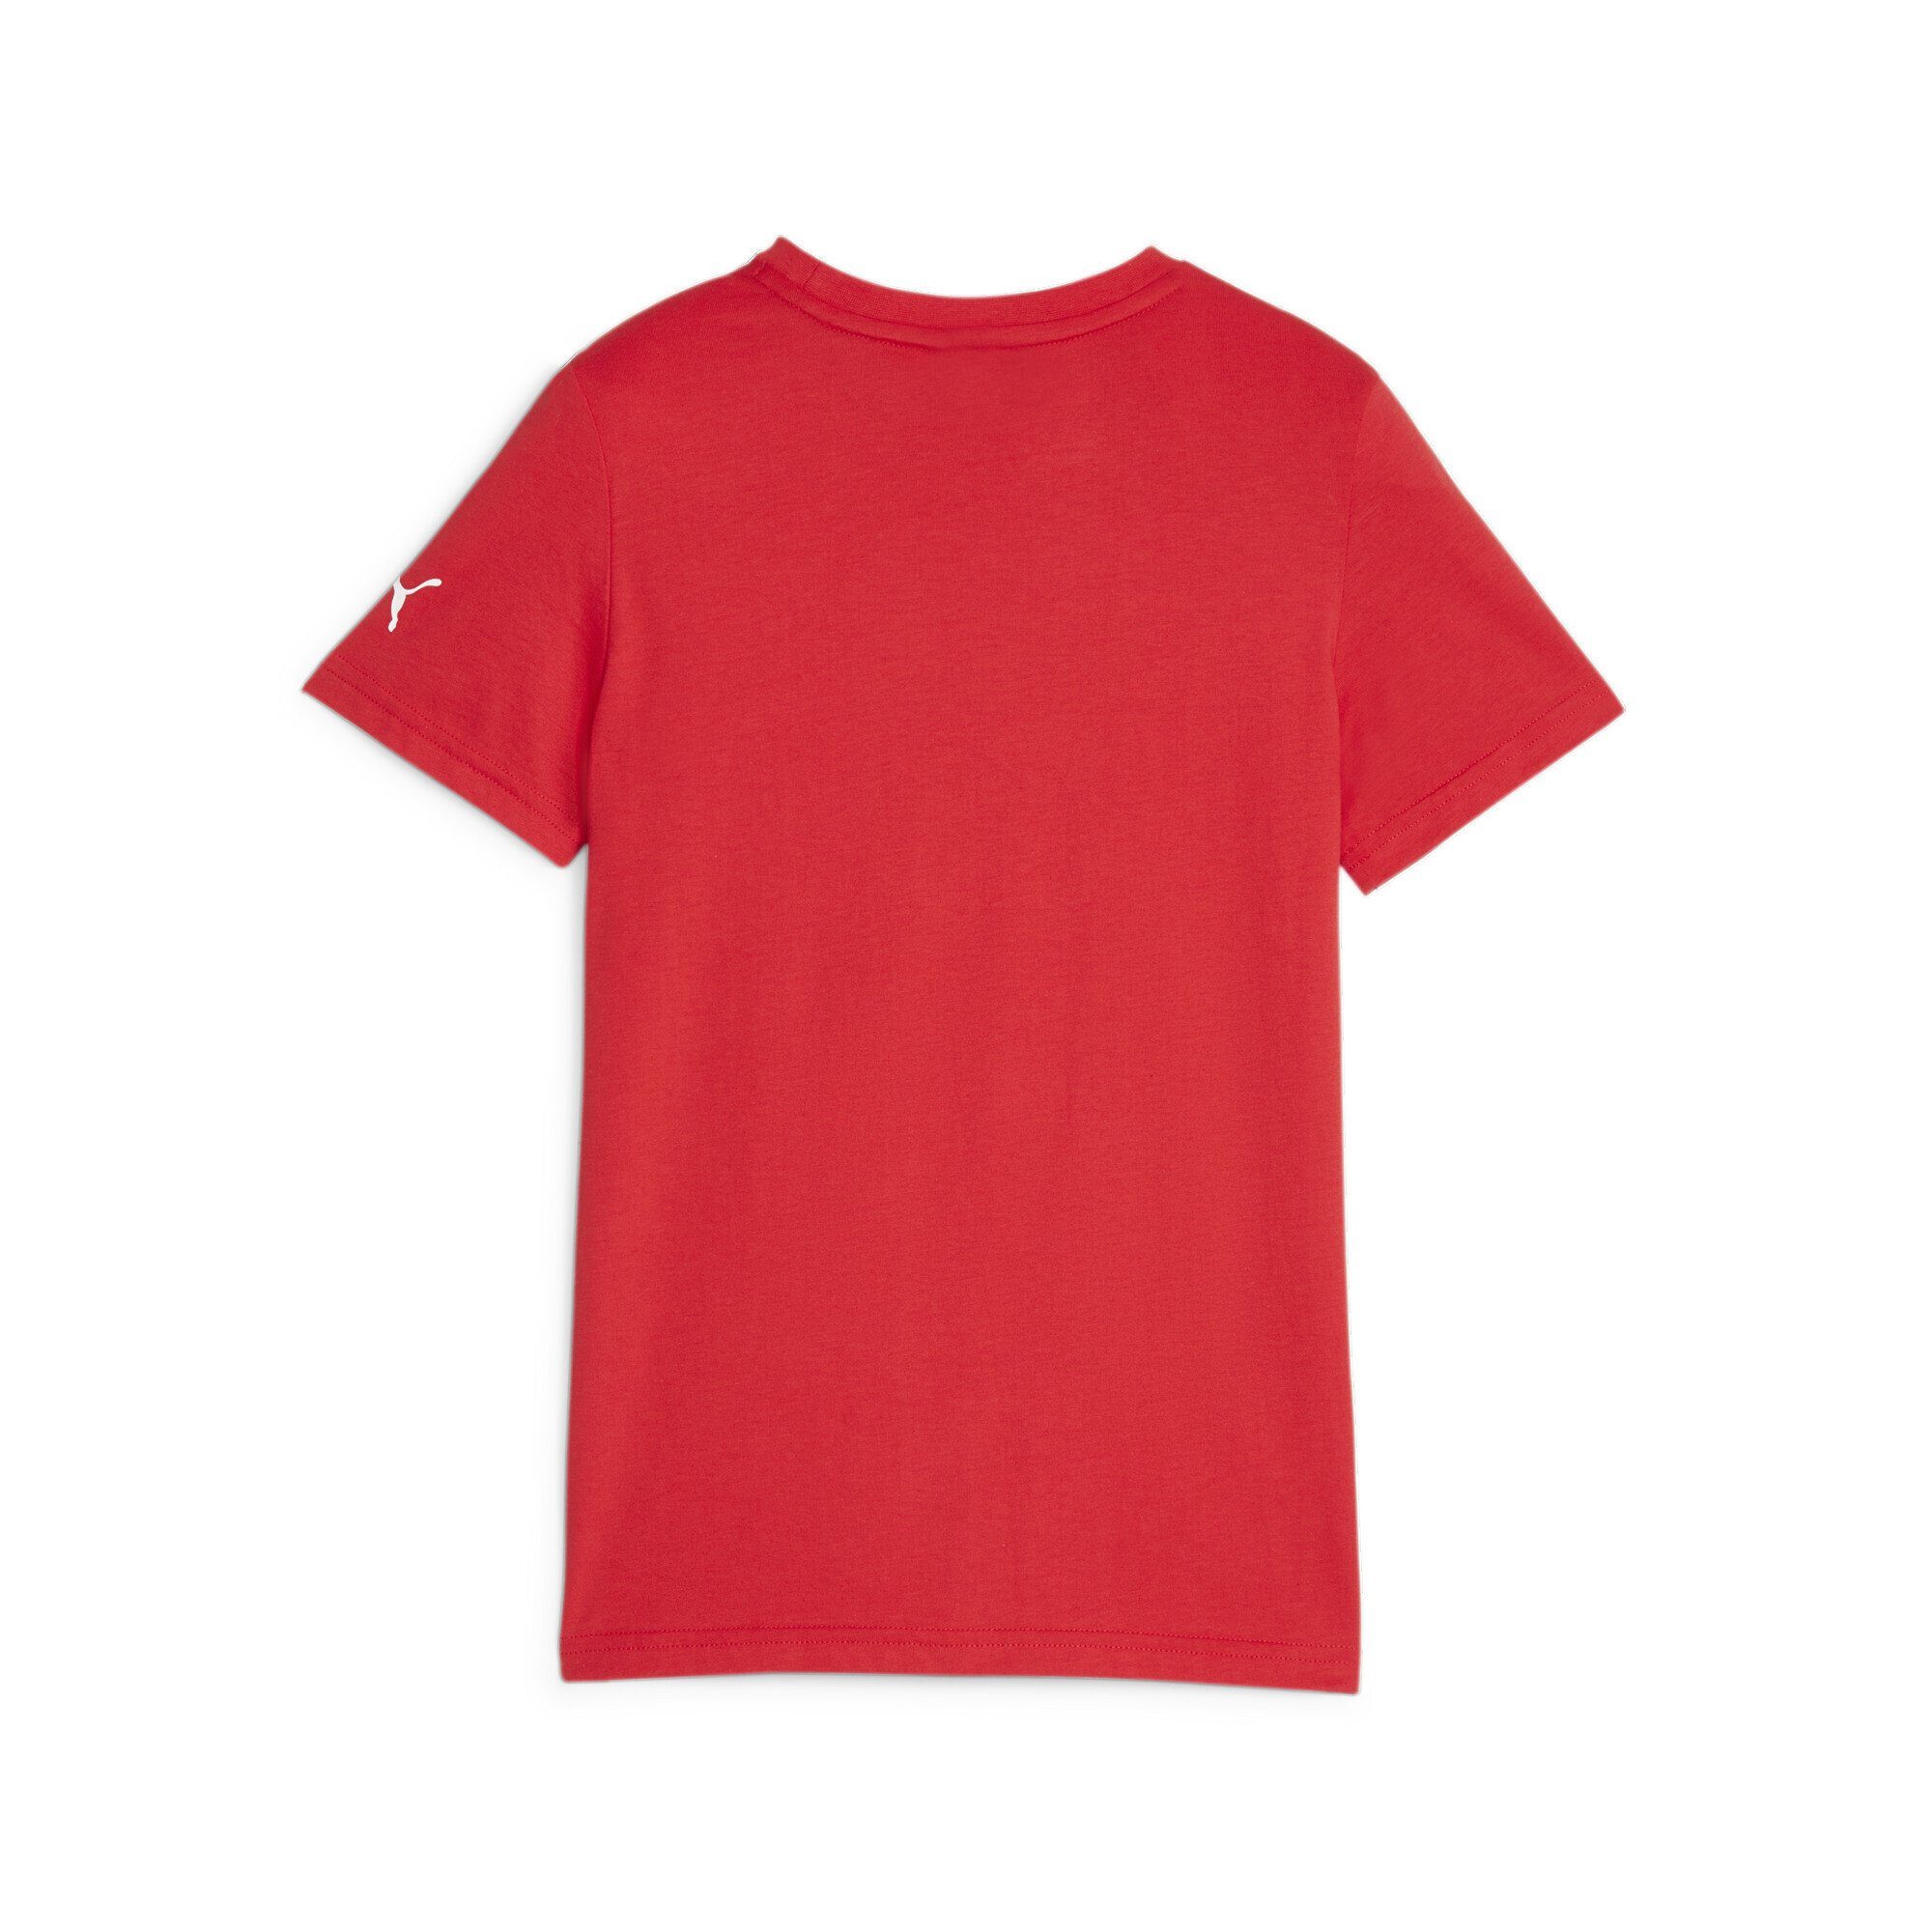 T-Shirt Ferrari Motorsport Corsa T-Shirt Jugendliche Red PUMA Rosso Scuderia